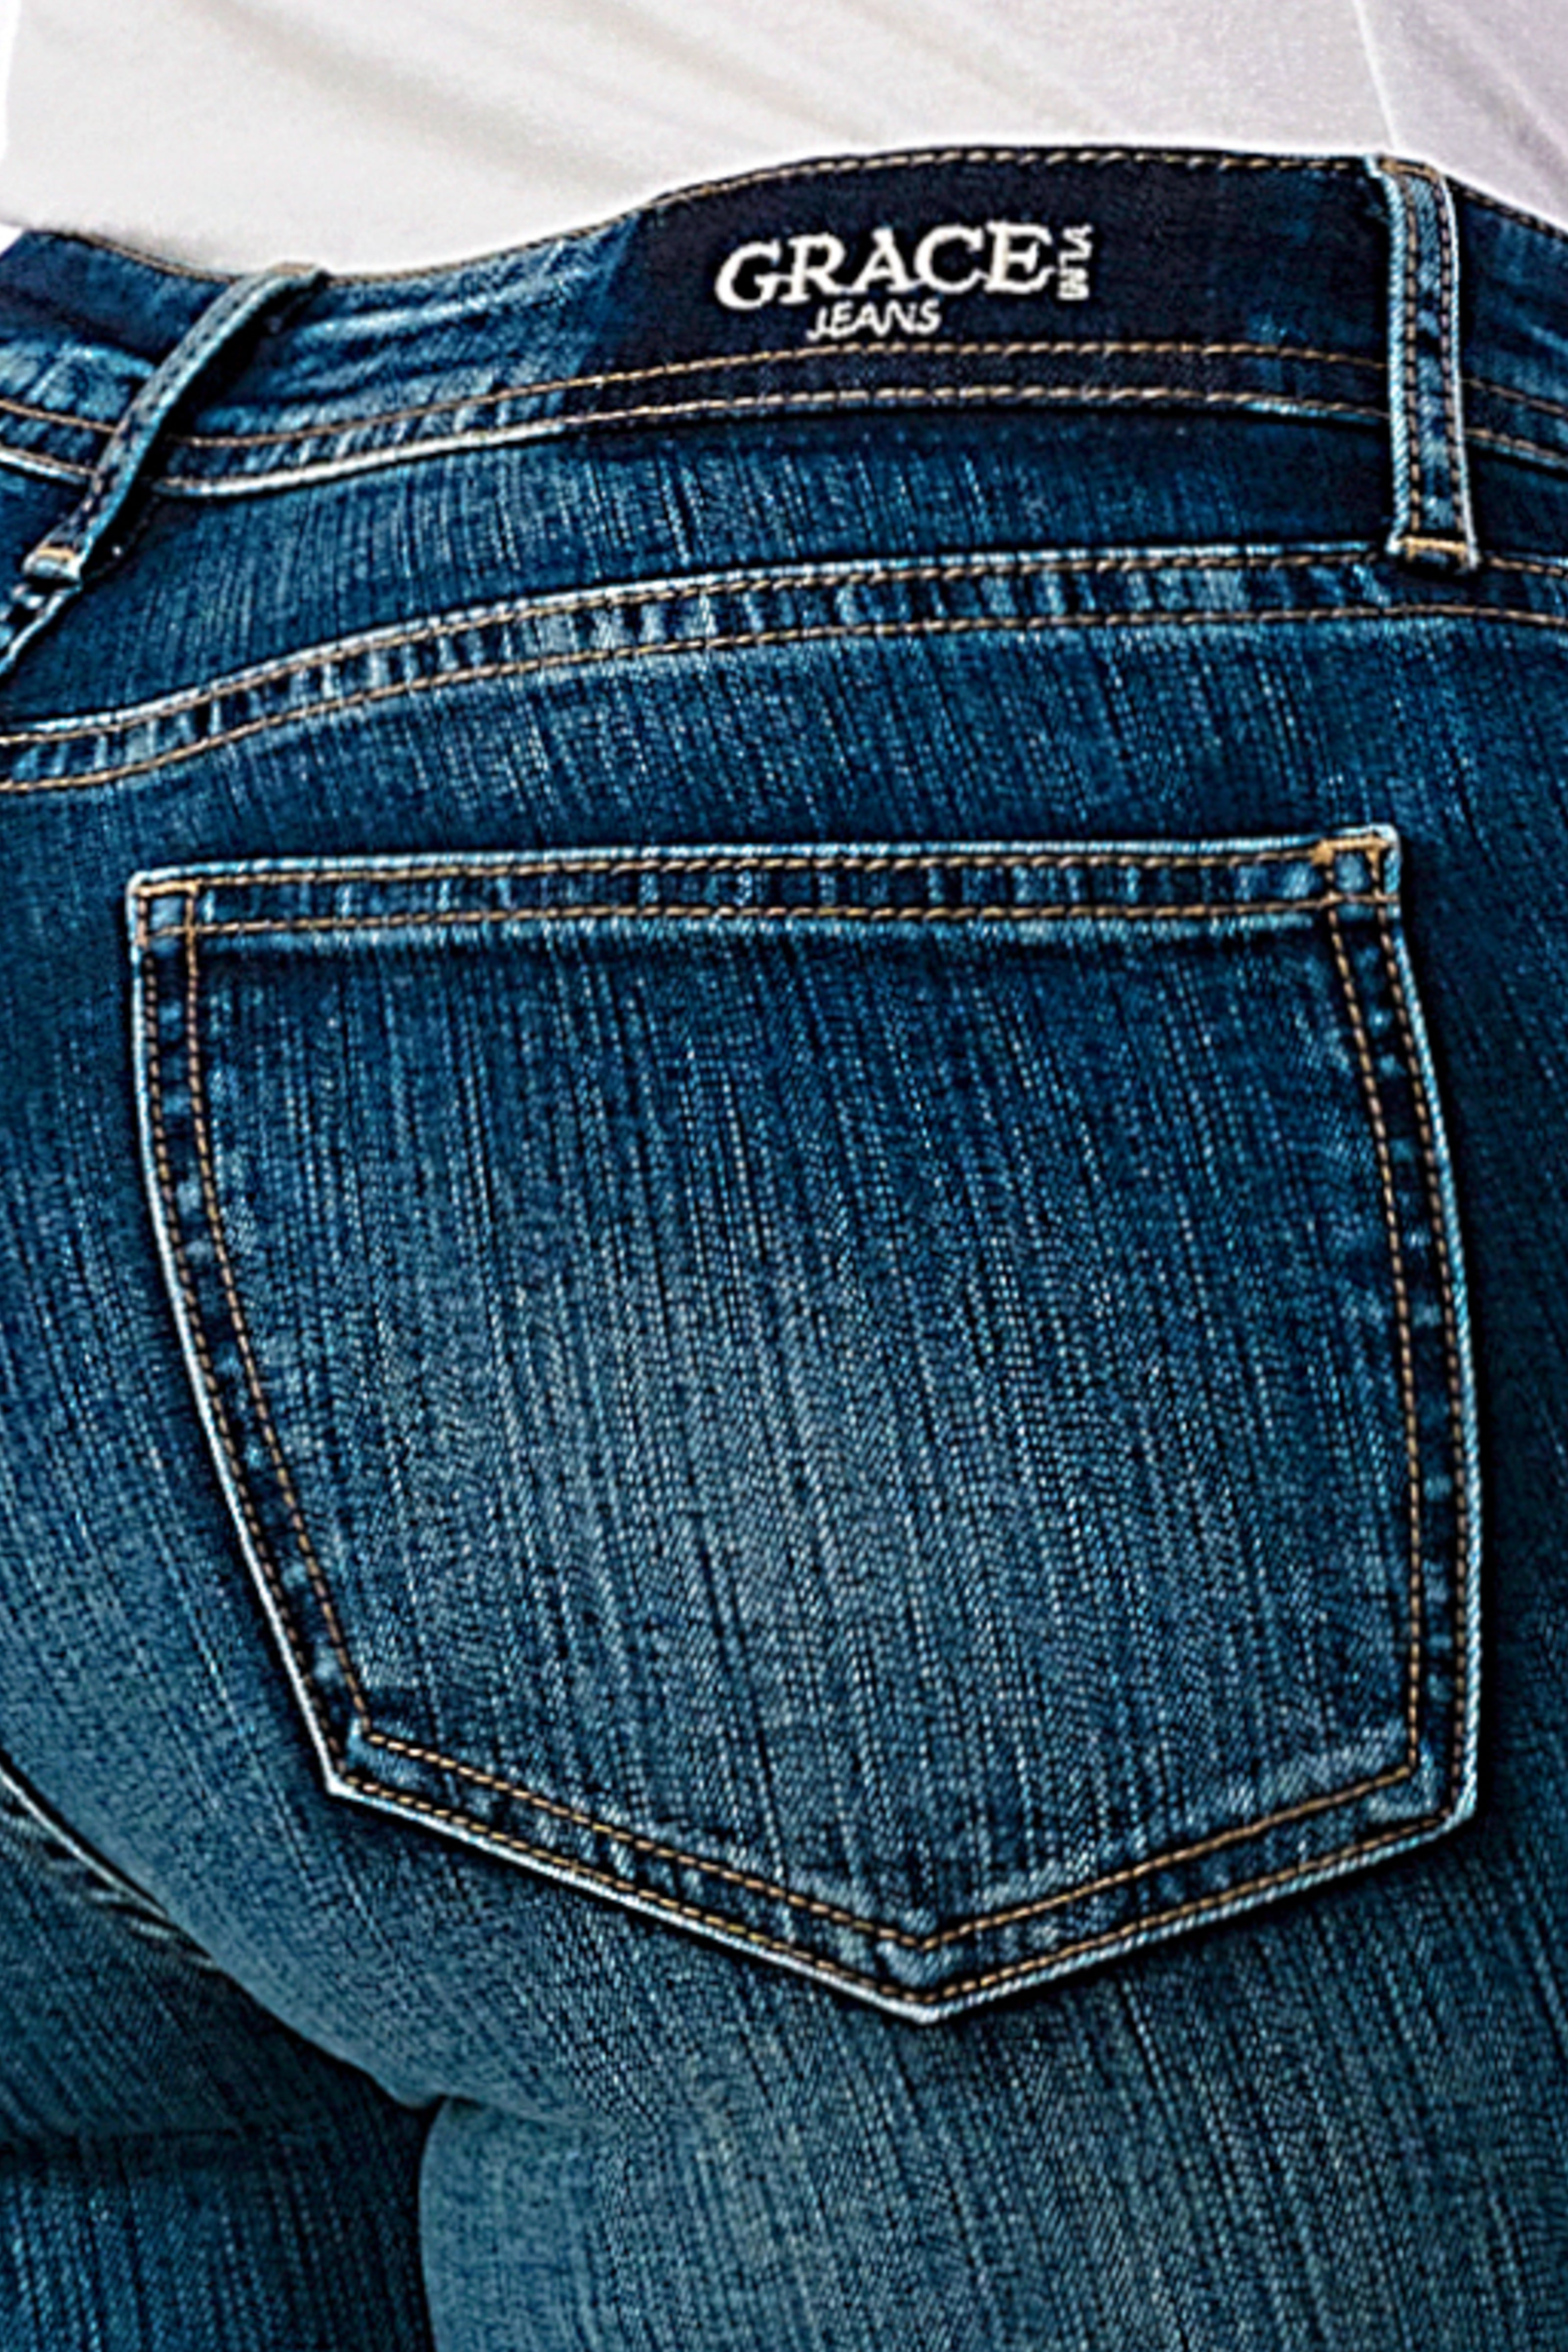 Basic 5 Pockets Med Blue Mid Rise Skinny Jeans